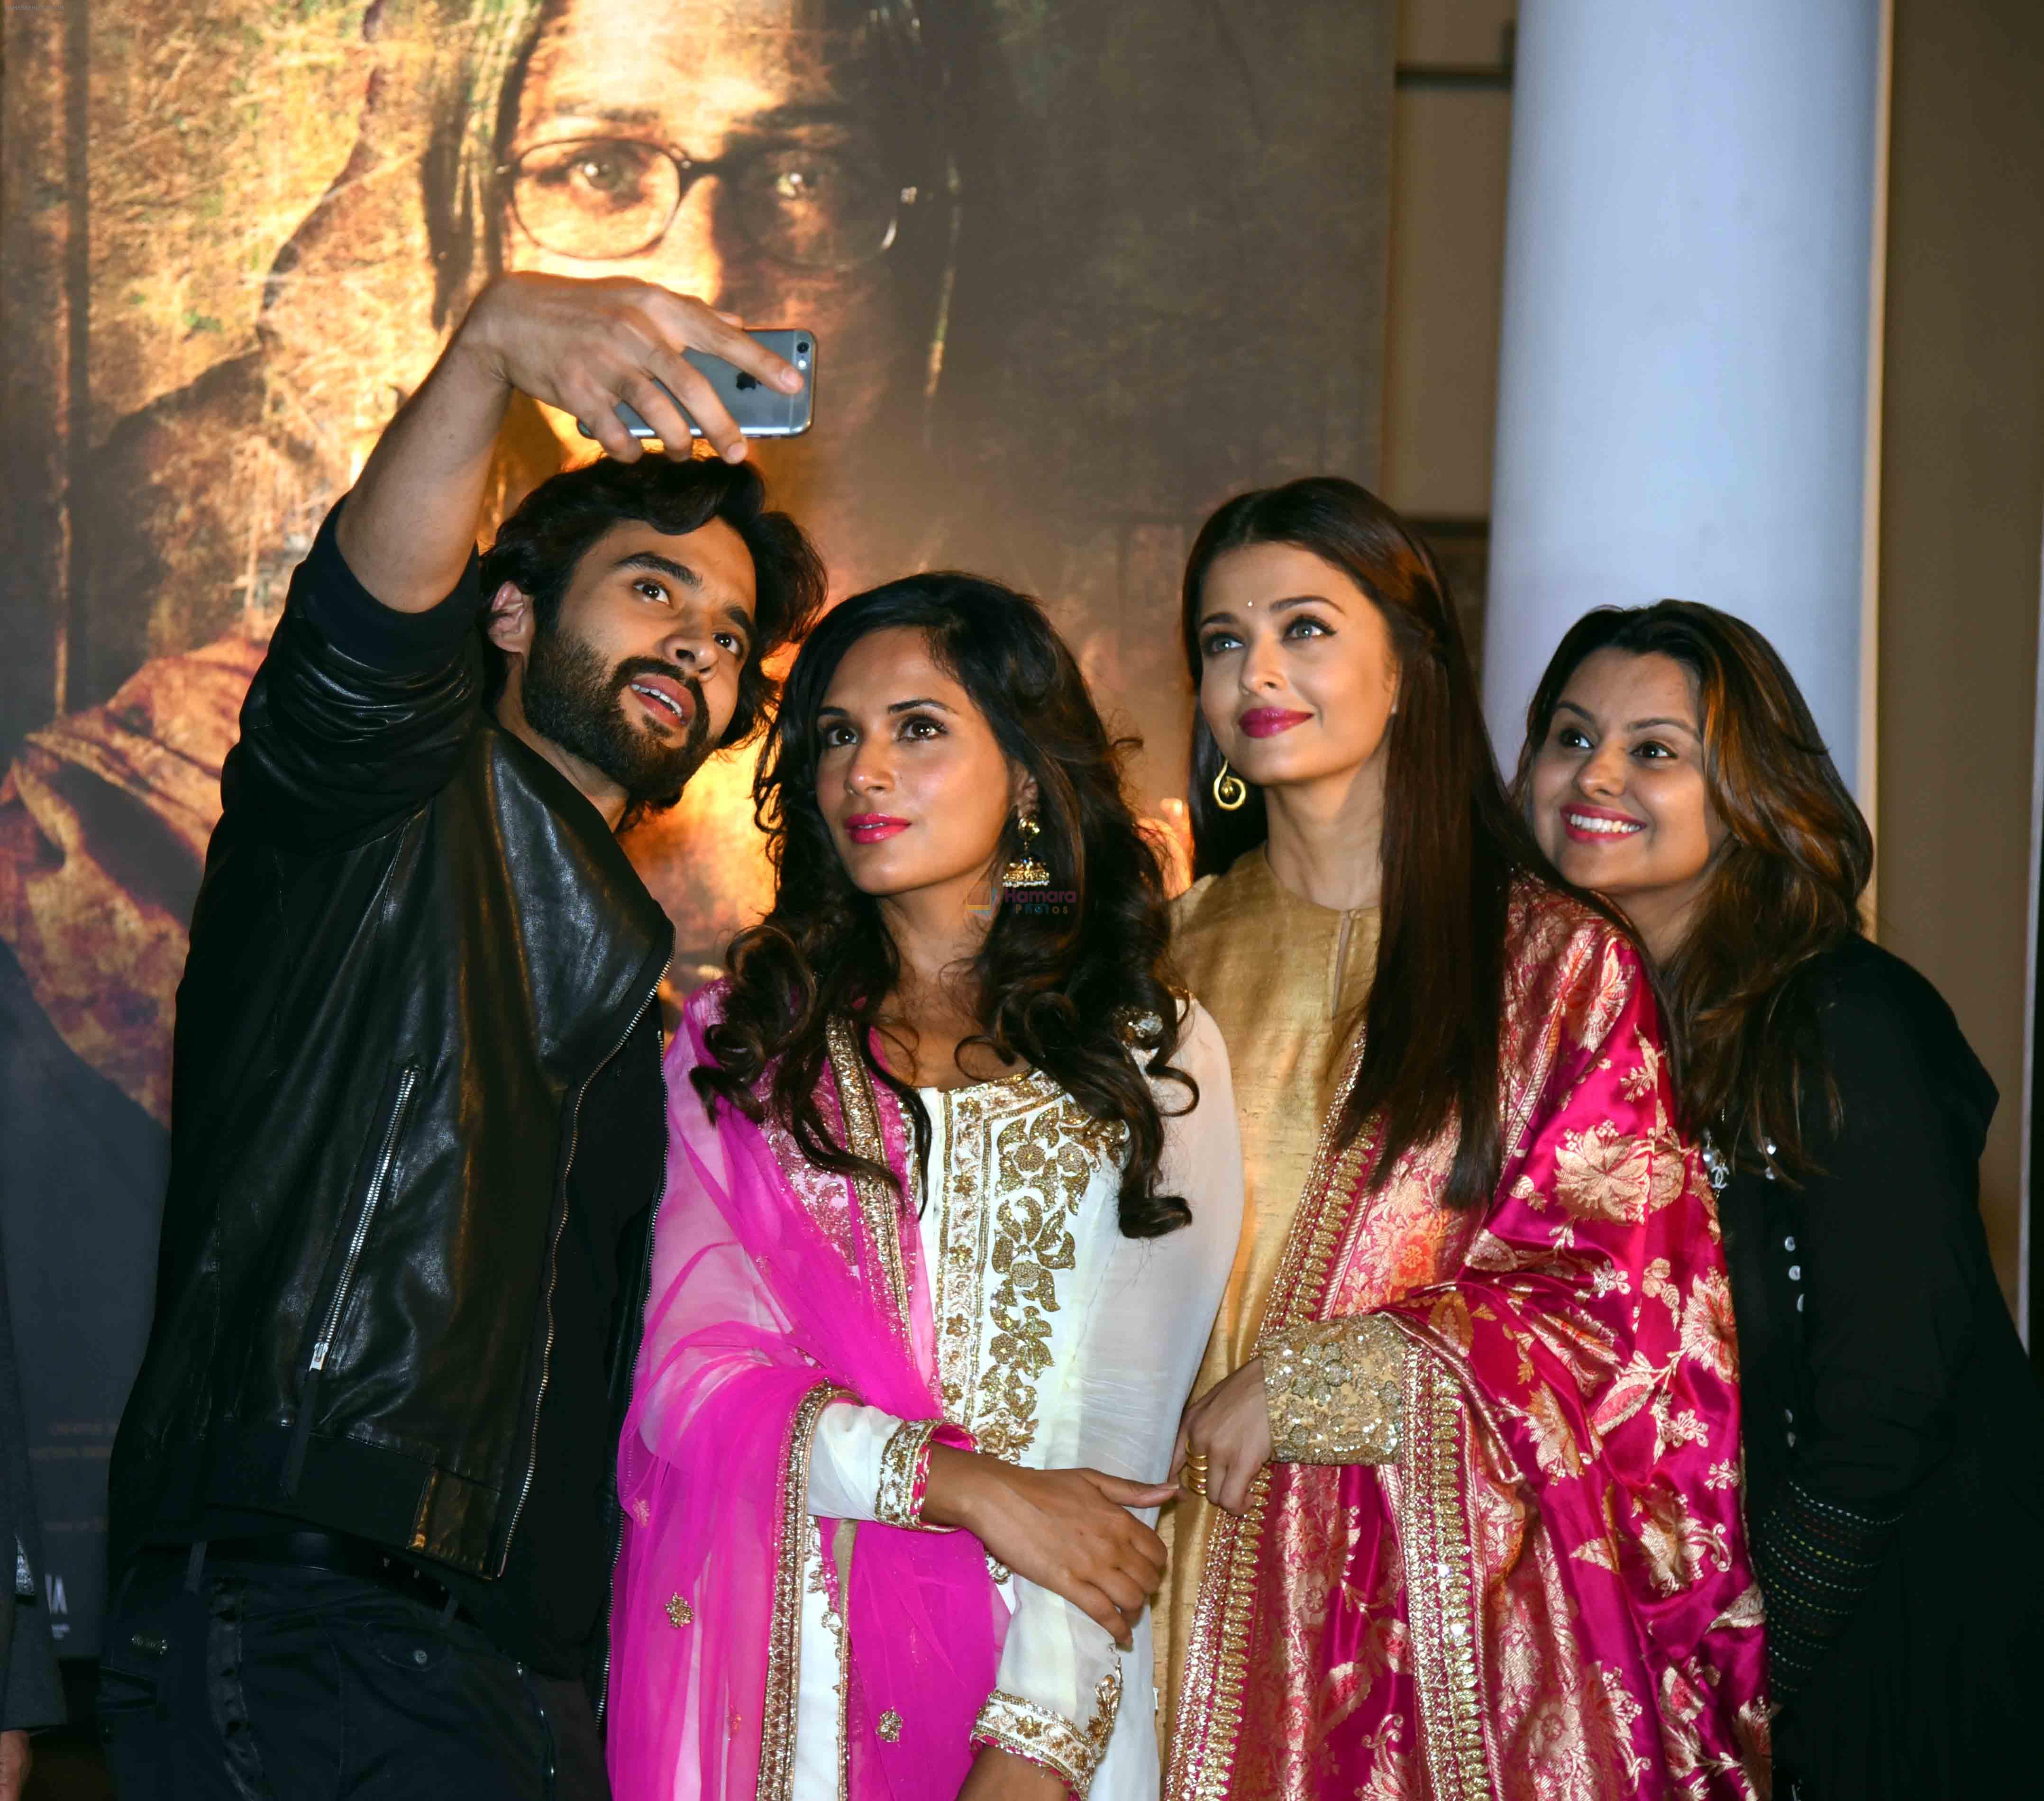 Aishwarya Rai Bachchan, Richa Chadda at the first look launch of Sarbjit in Delhi on 29th Feb 2016